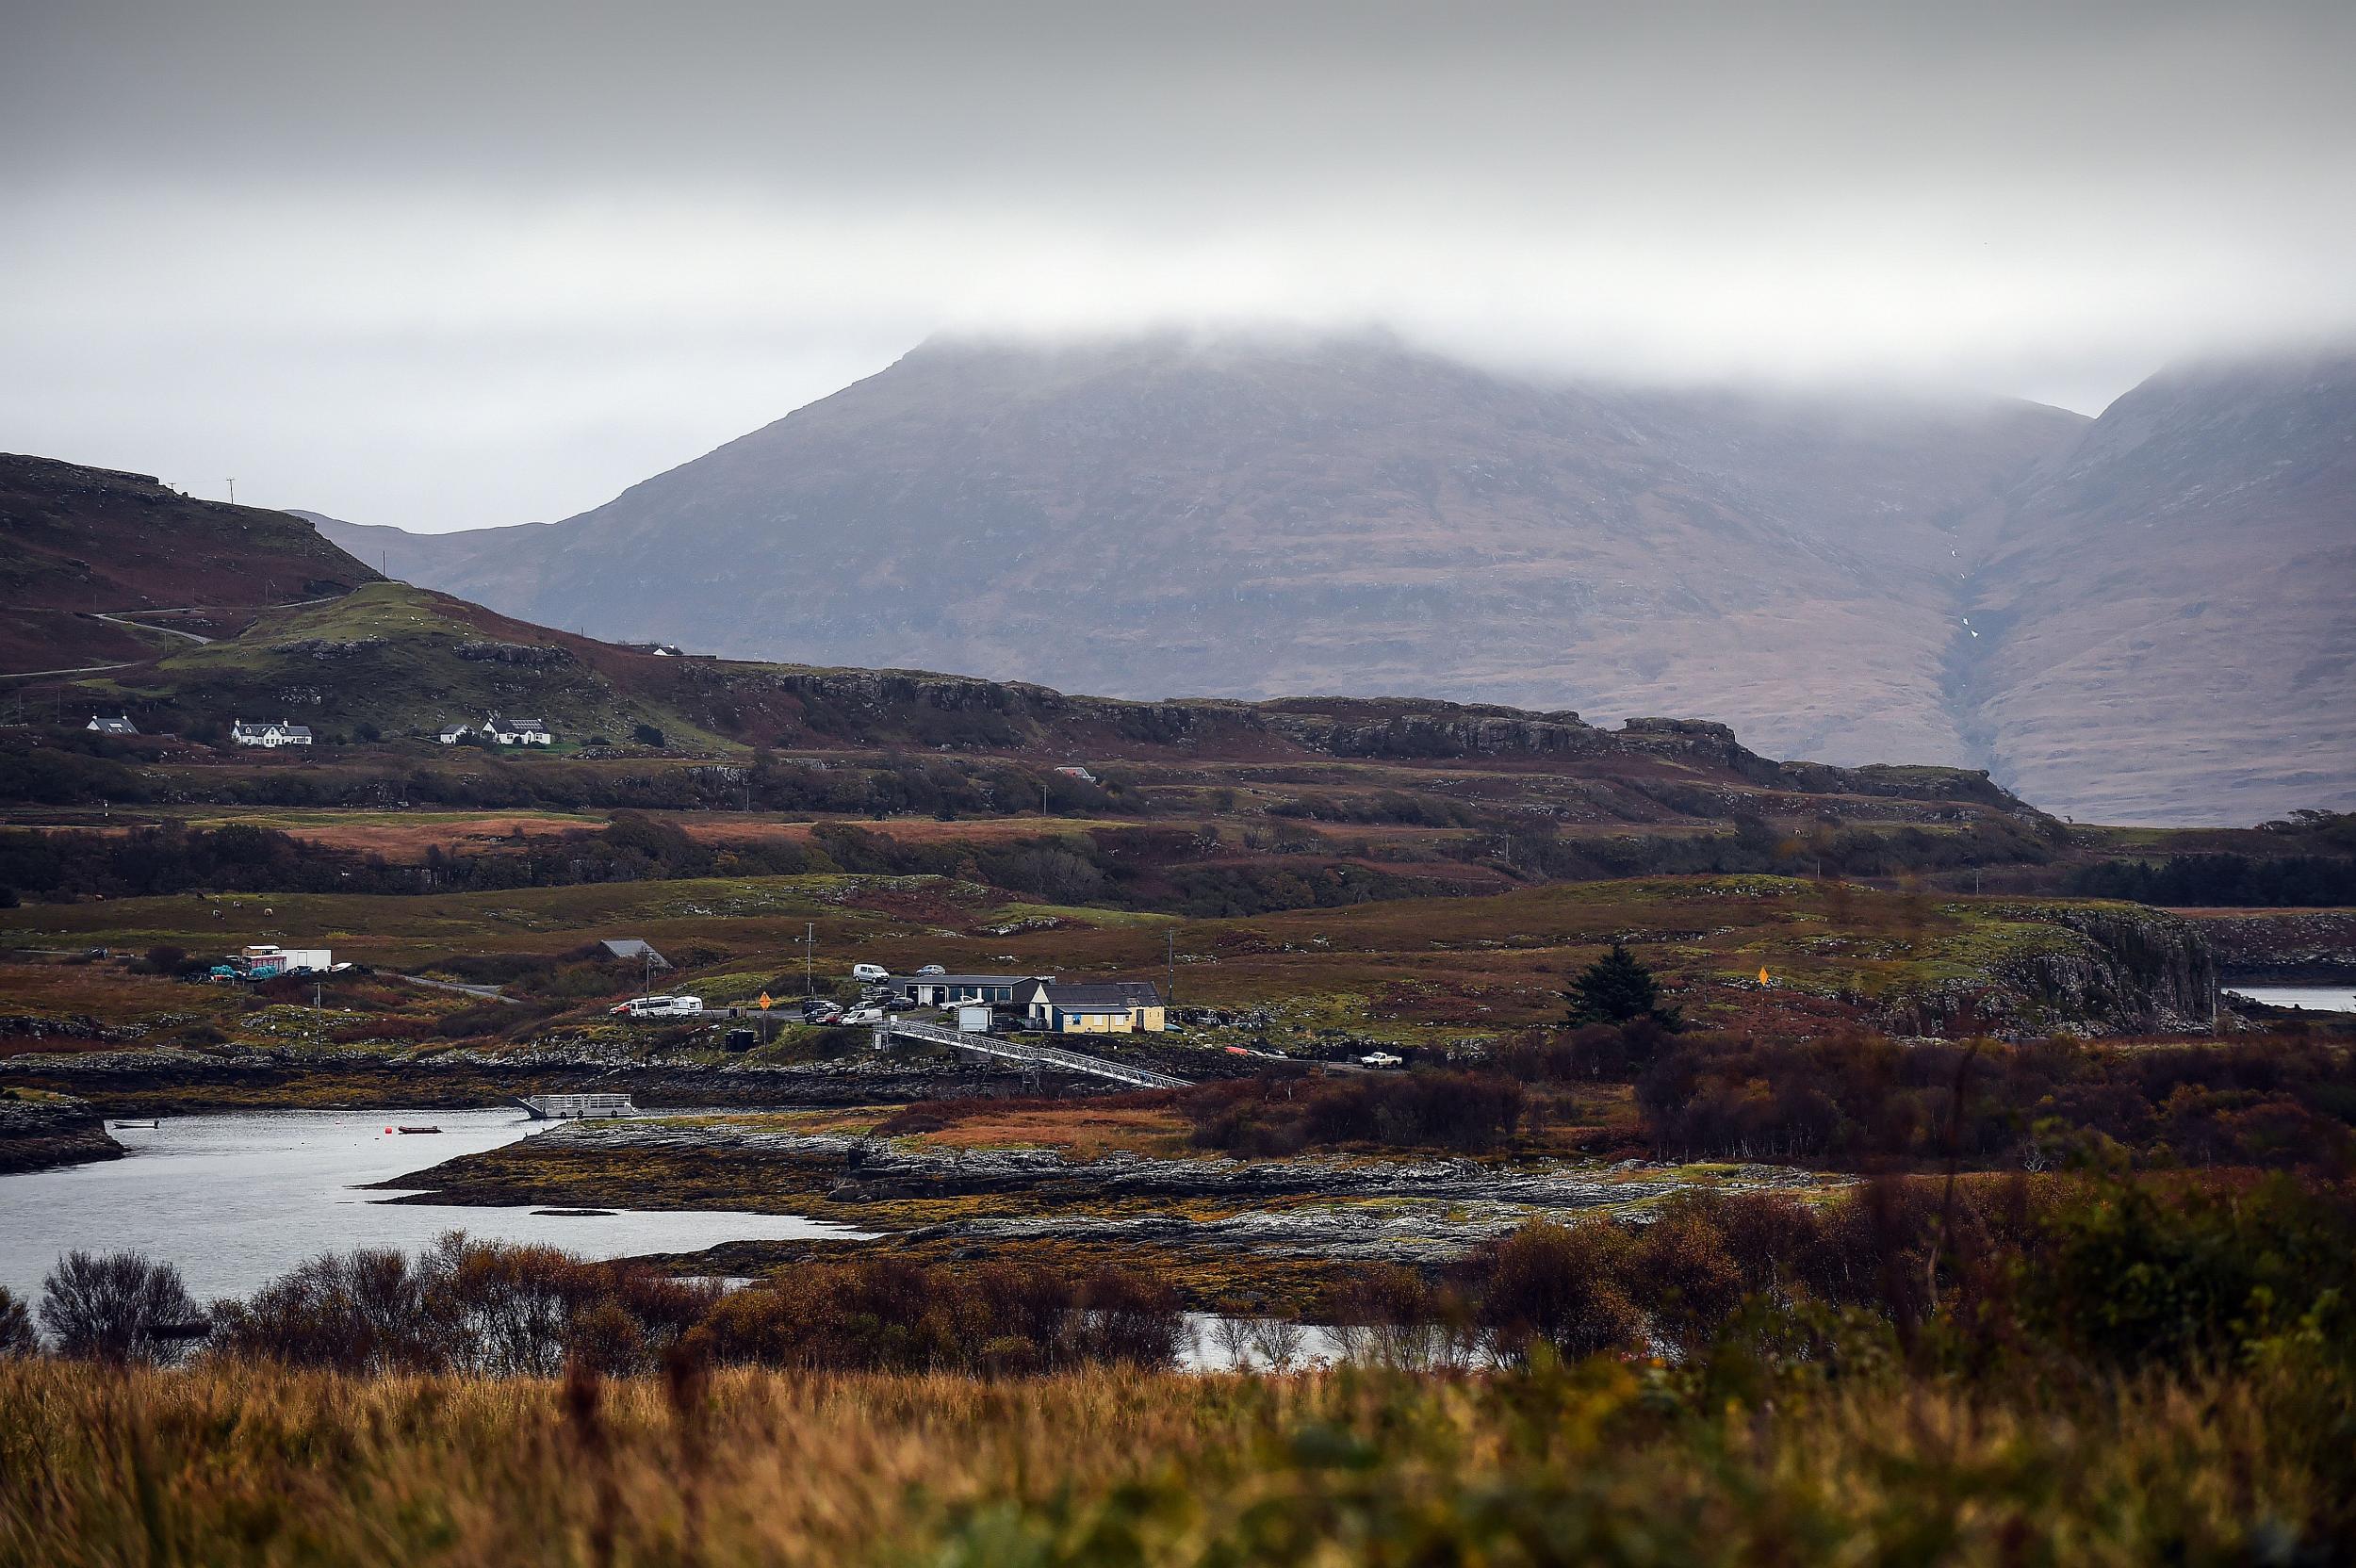 Views of the Isle of Ulva, off Scotland's west coast